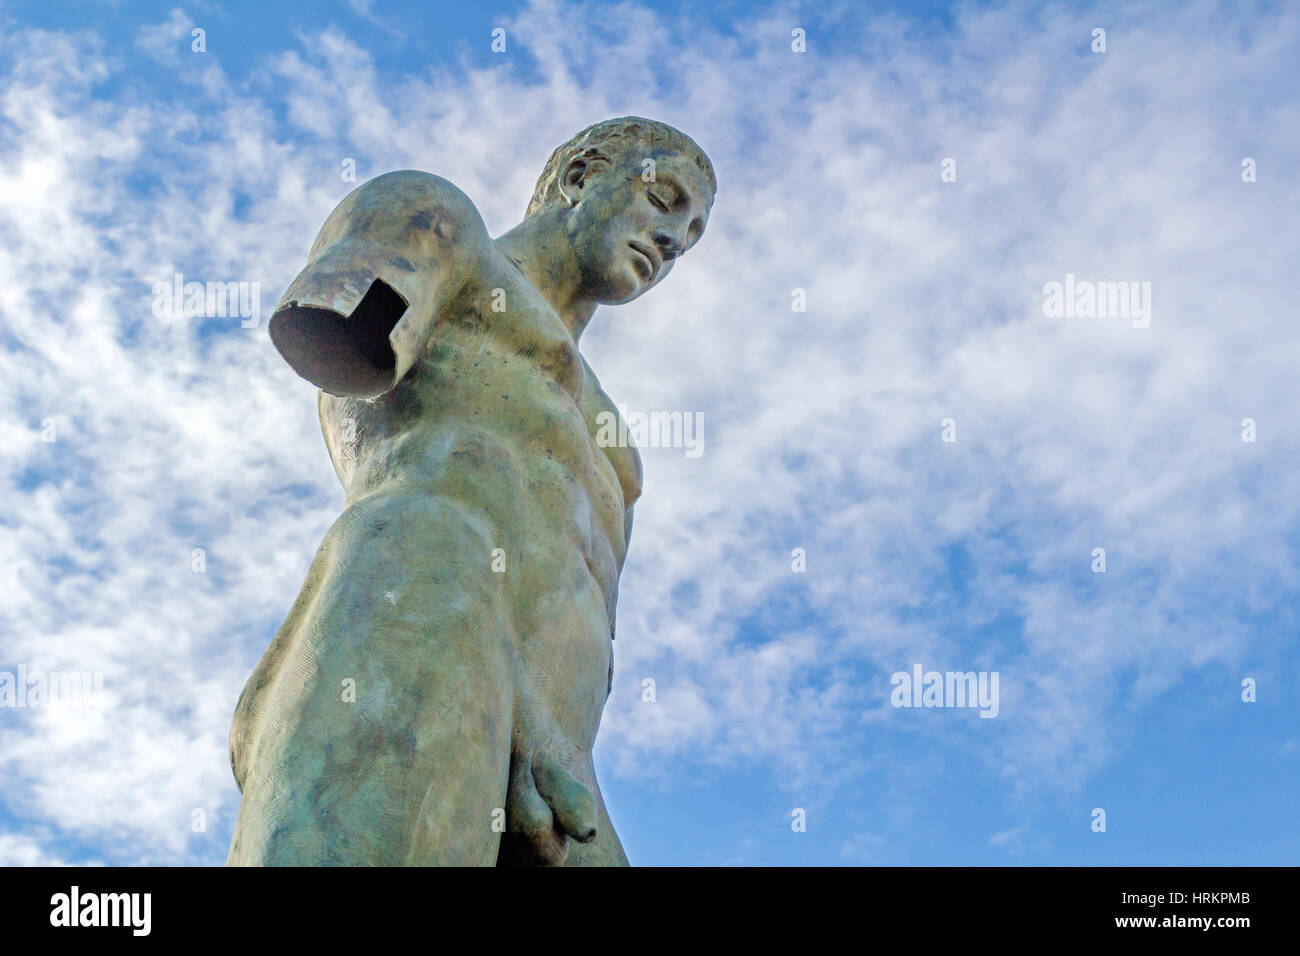 A Sculpture On Display In Pompeii Italy By Igor Mitoraj Stock Photo Alamy